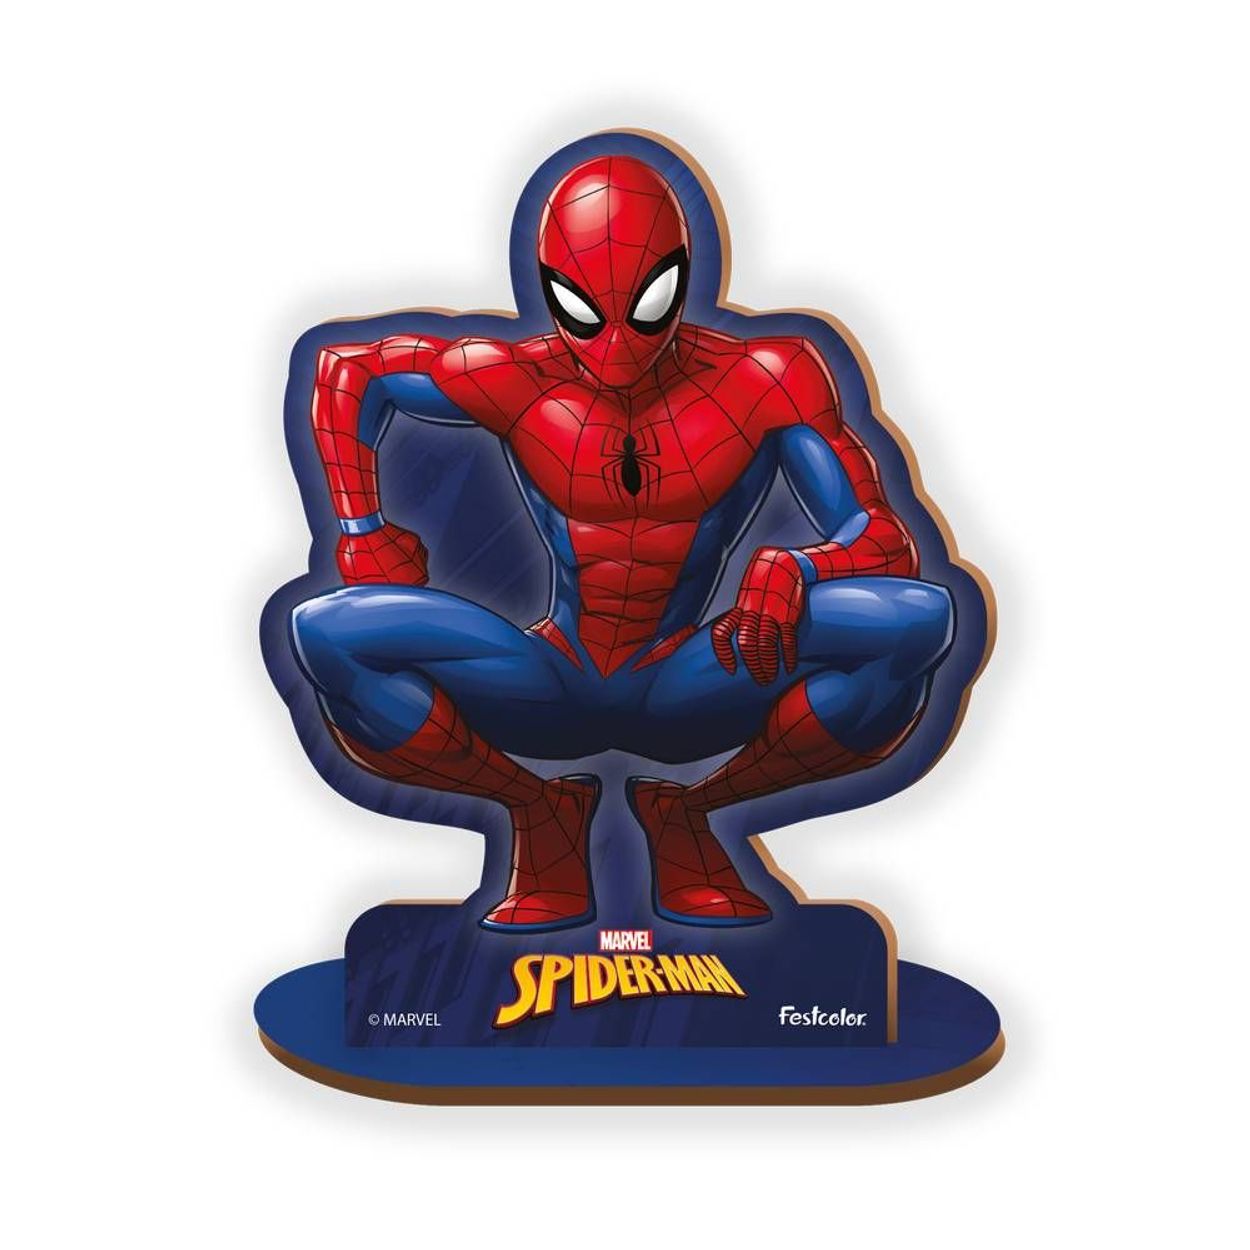 TOP 5 MELHORES JOGOS SPIDER-MAN NO ROBLOX! (Top 5 Spider-Man Games